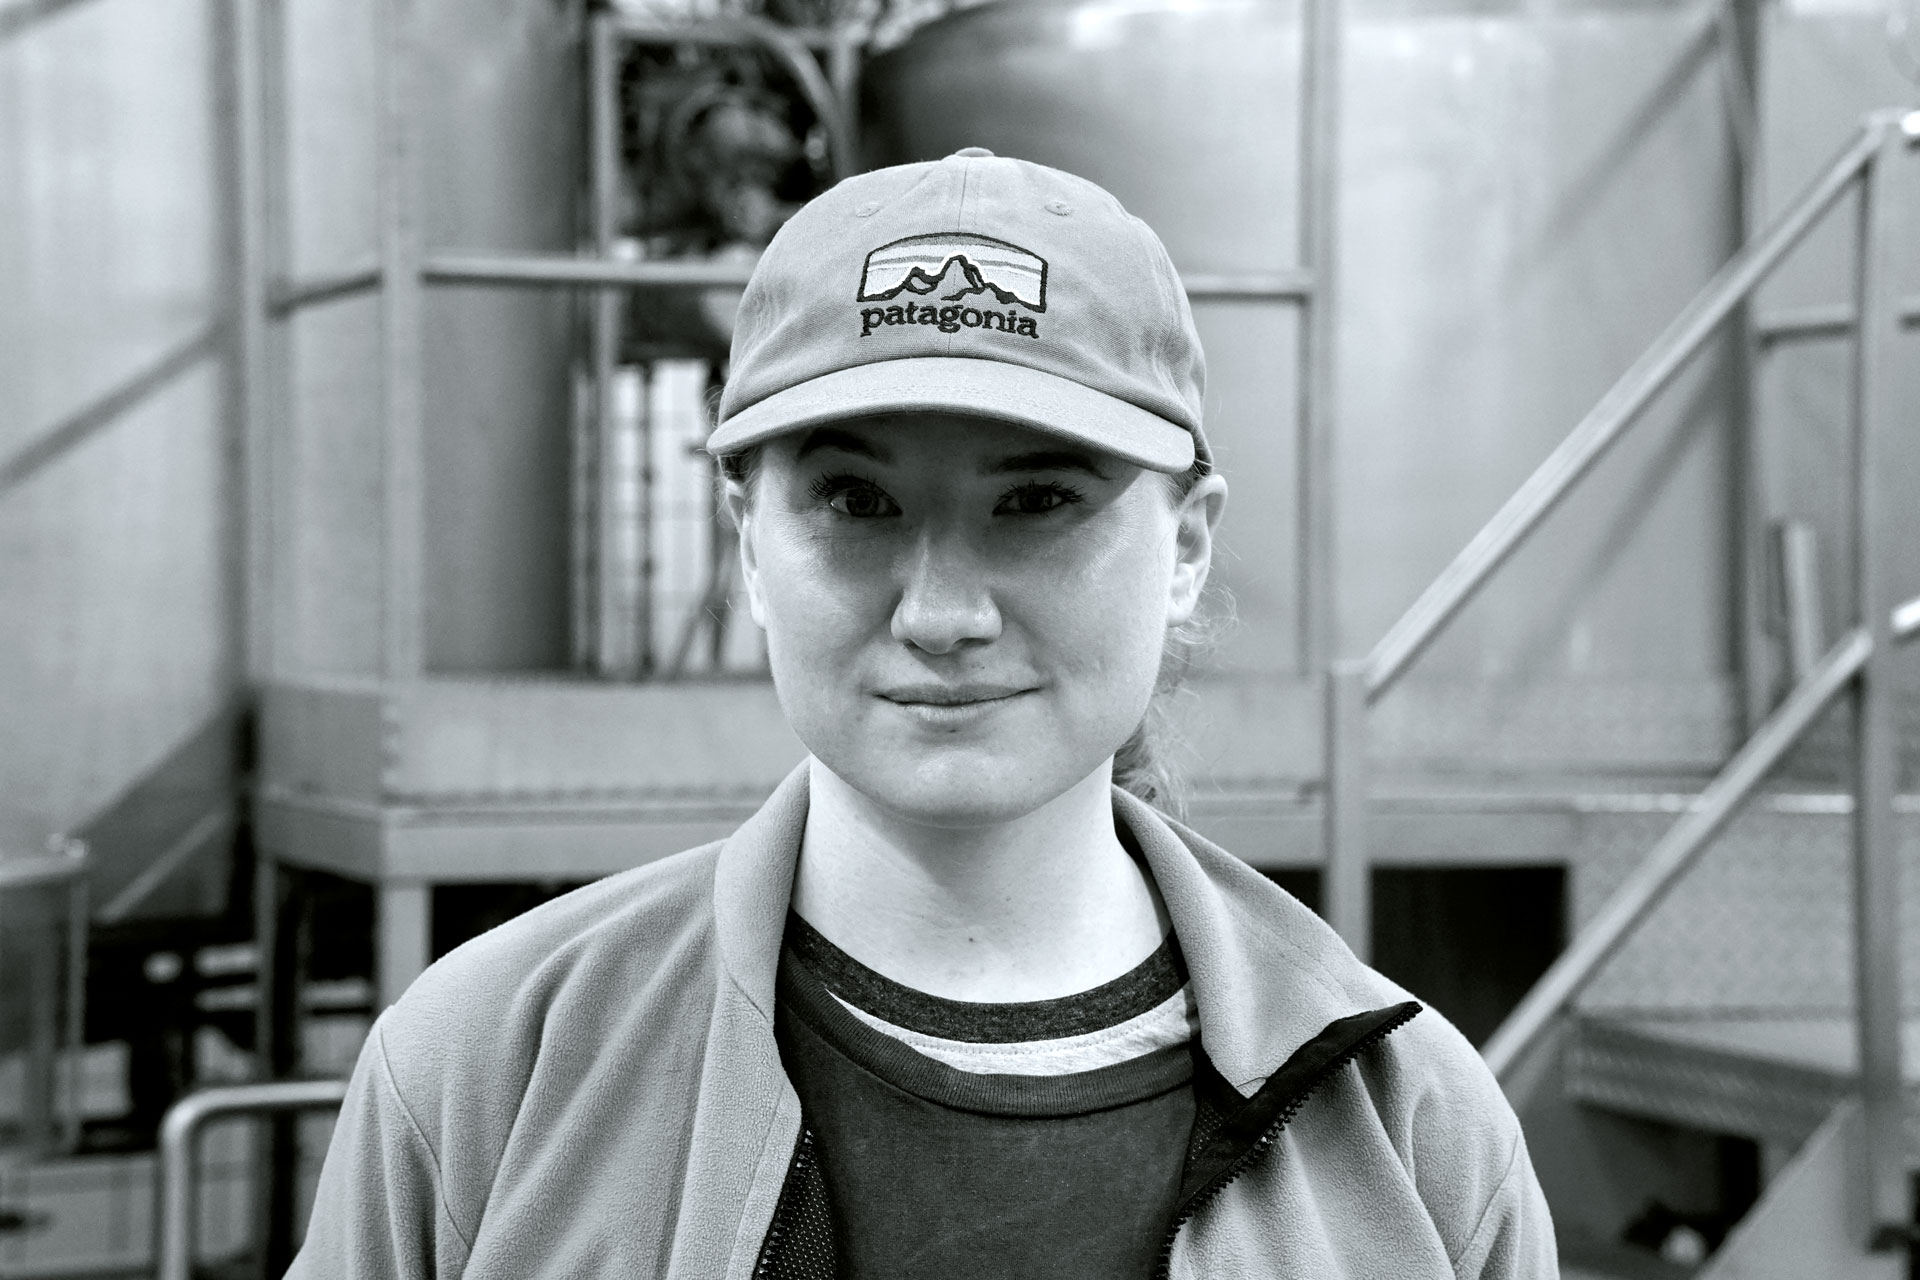 Linda Bengtström, interning at Beerbliotek, a Swedish Craft Beer Brewery in Gothenburg.